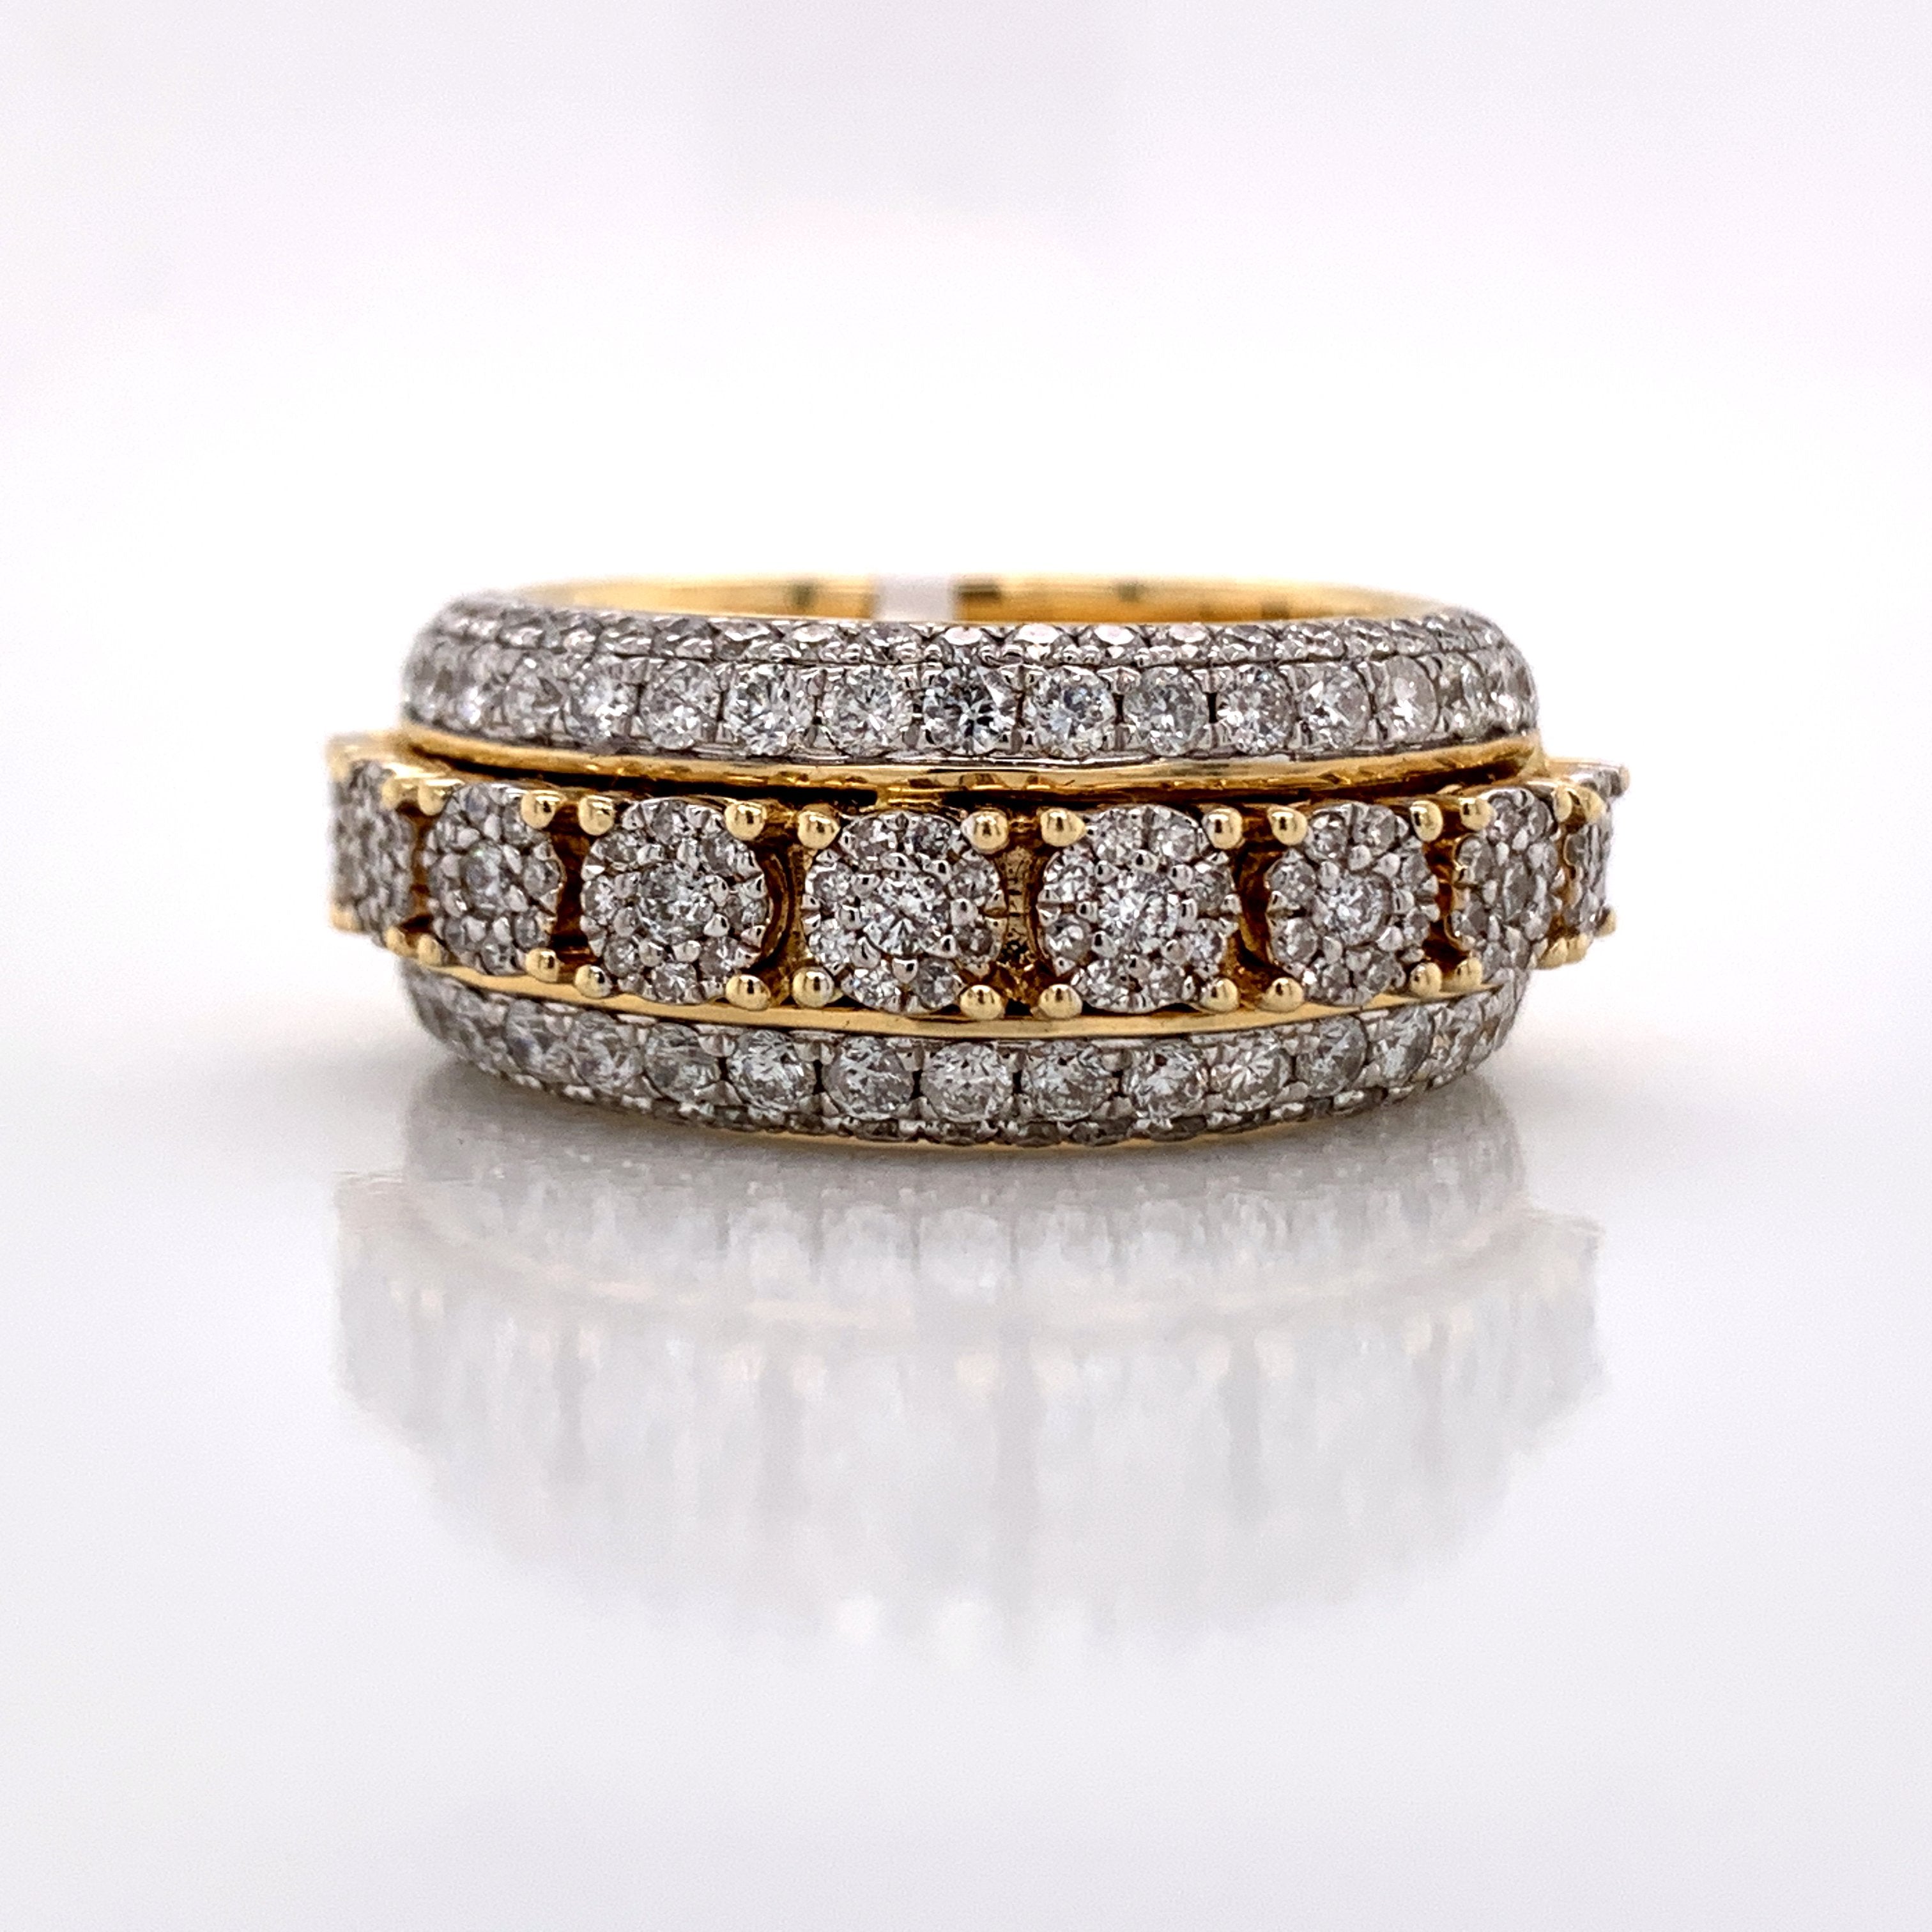 1.84CT Diamond 14K Yellow Gold Ring - White Carat Diamonds 